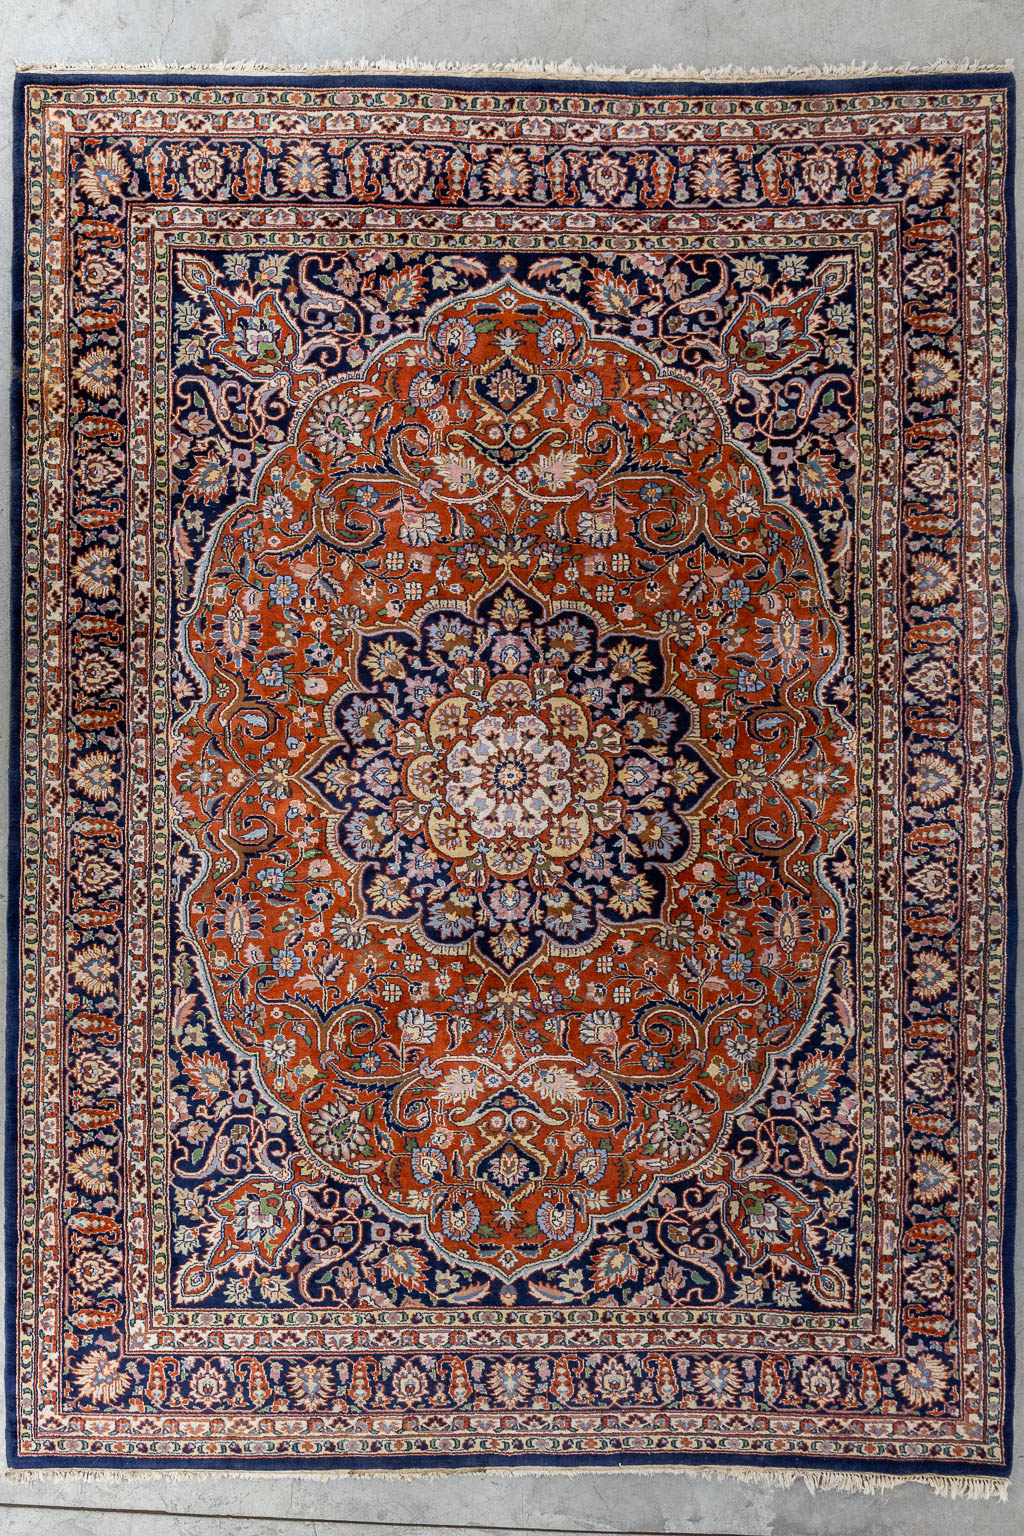  An Oriental hand-made carpet, Waramin